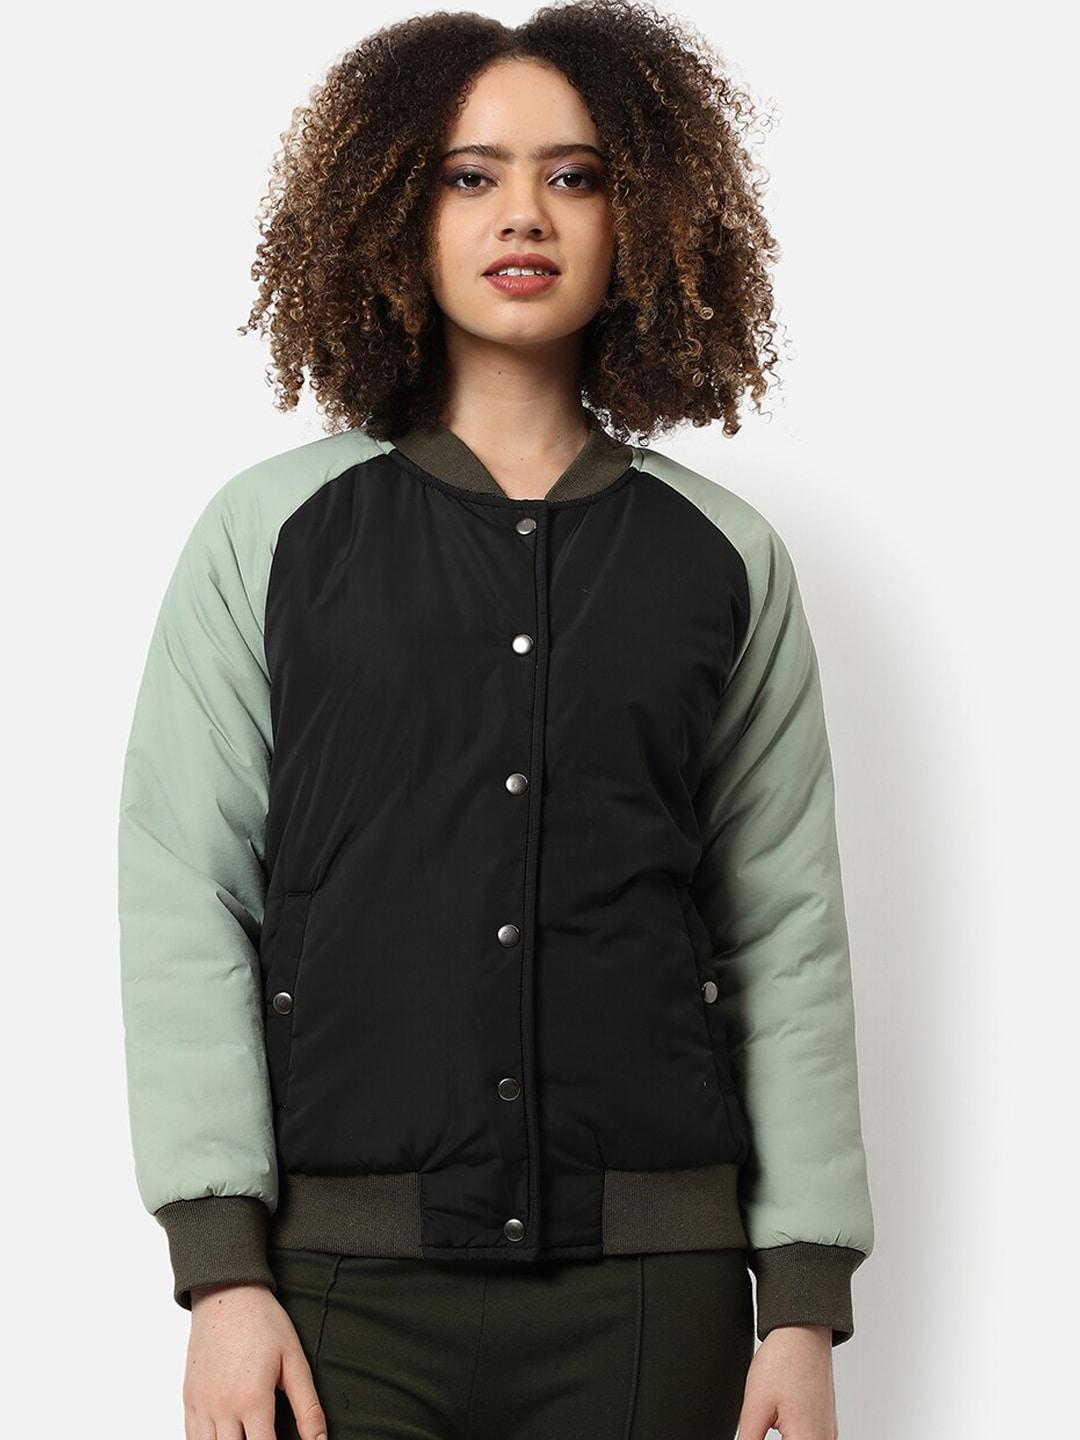 campus sutra women black green colourblocked windcheater outdoor bomber jacket